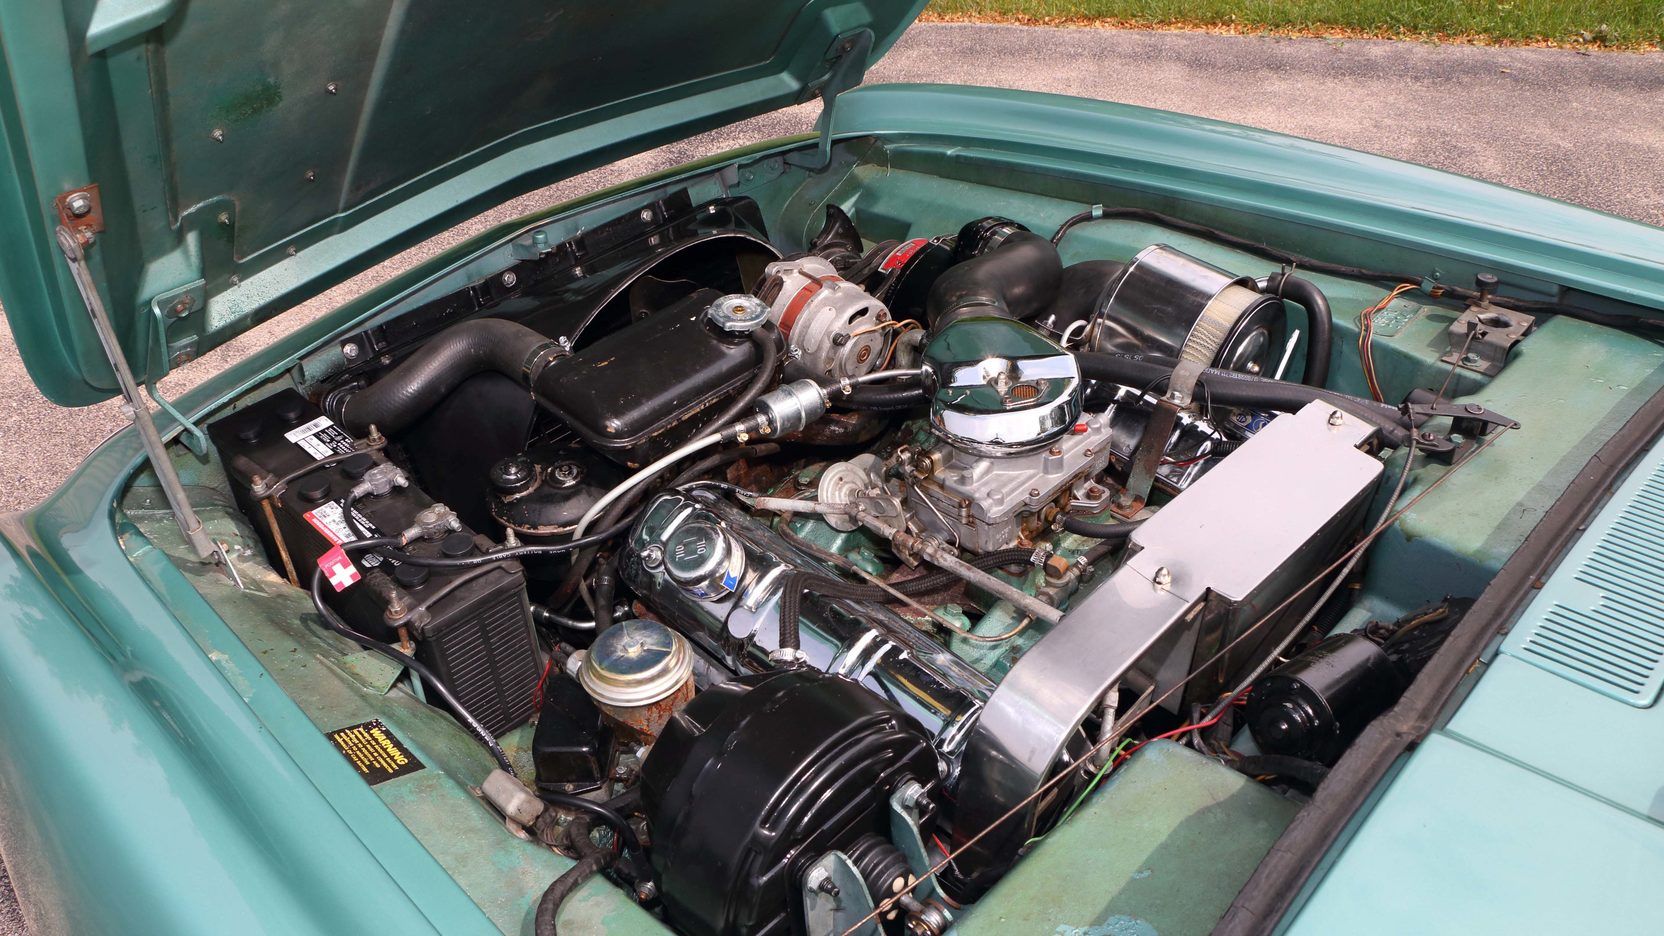 The Studebaker Avanti's Powerful Engine